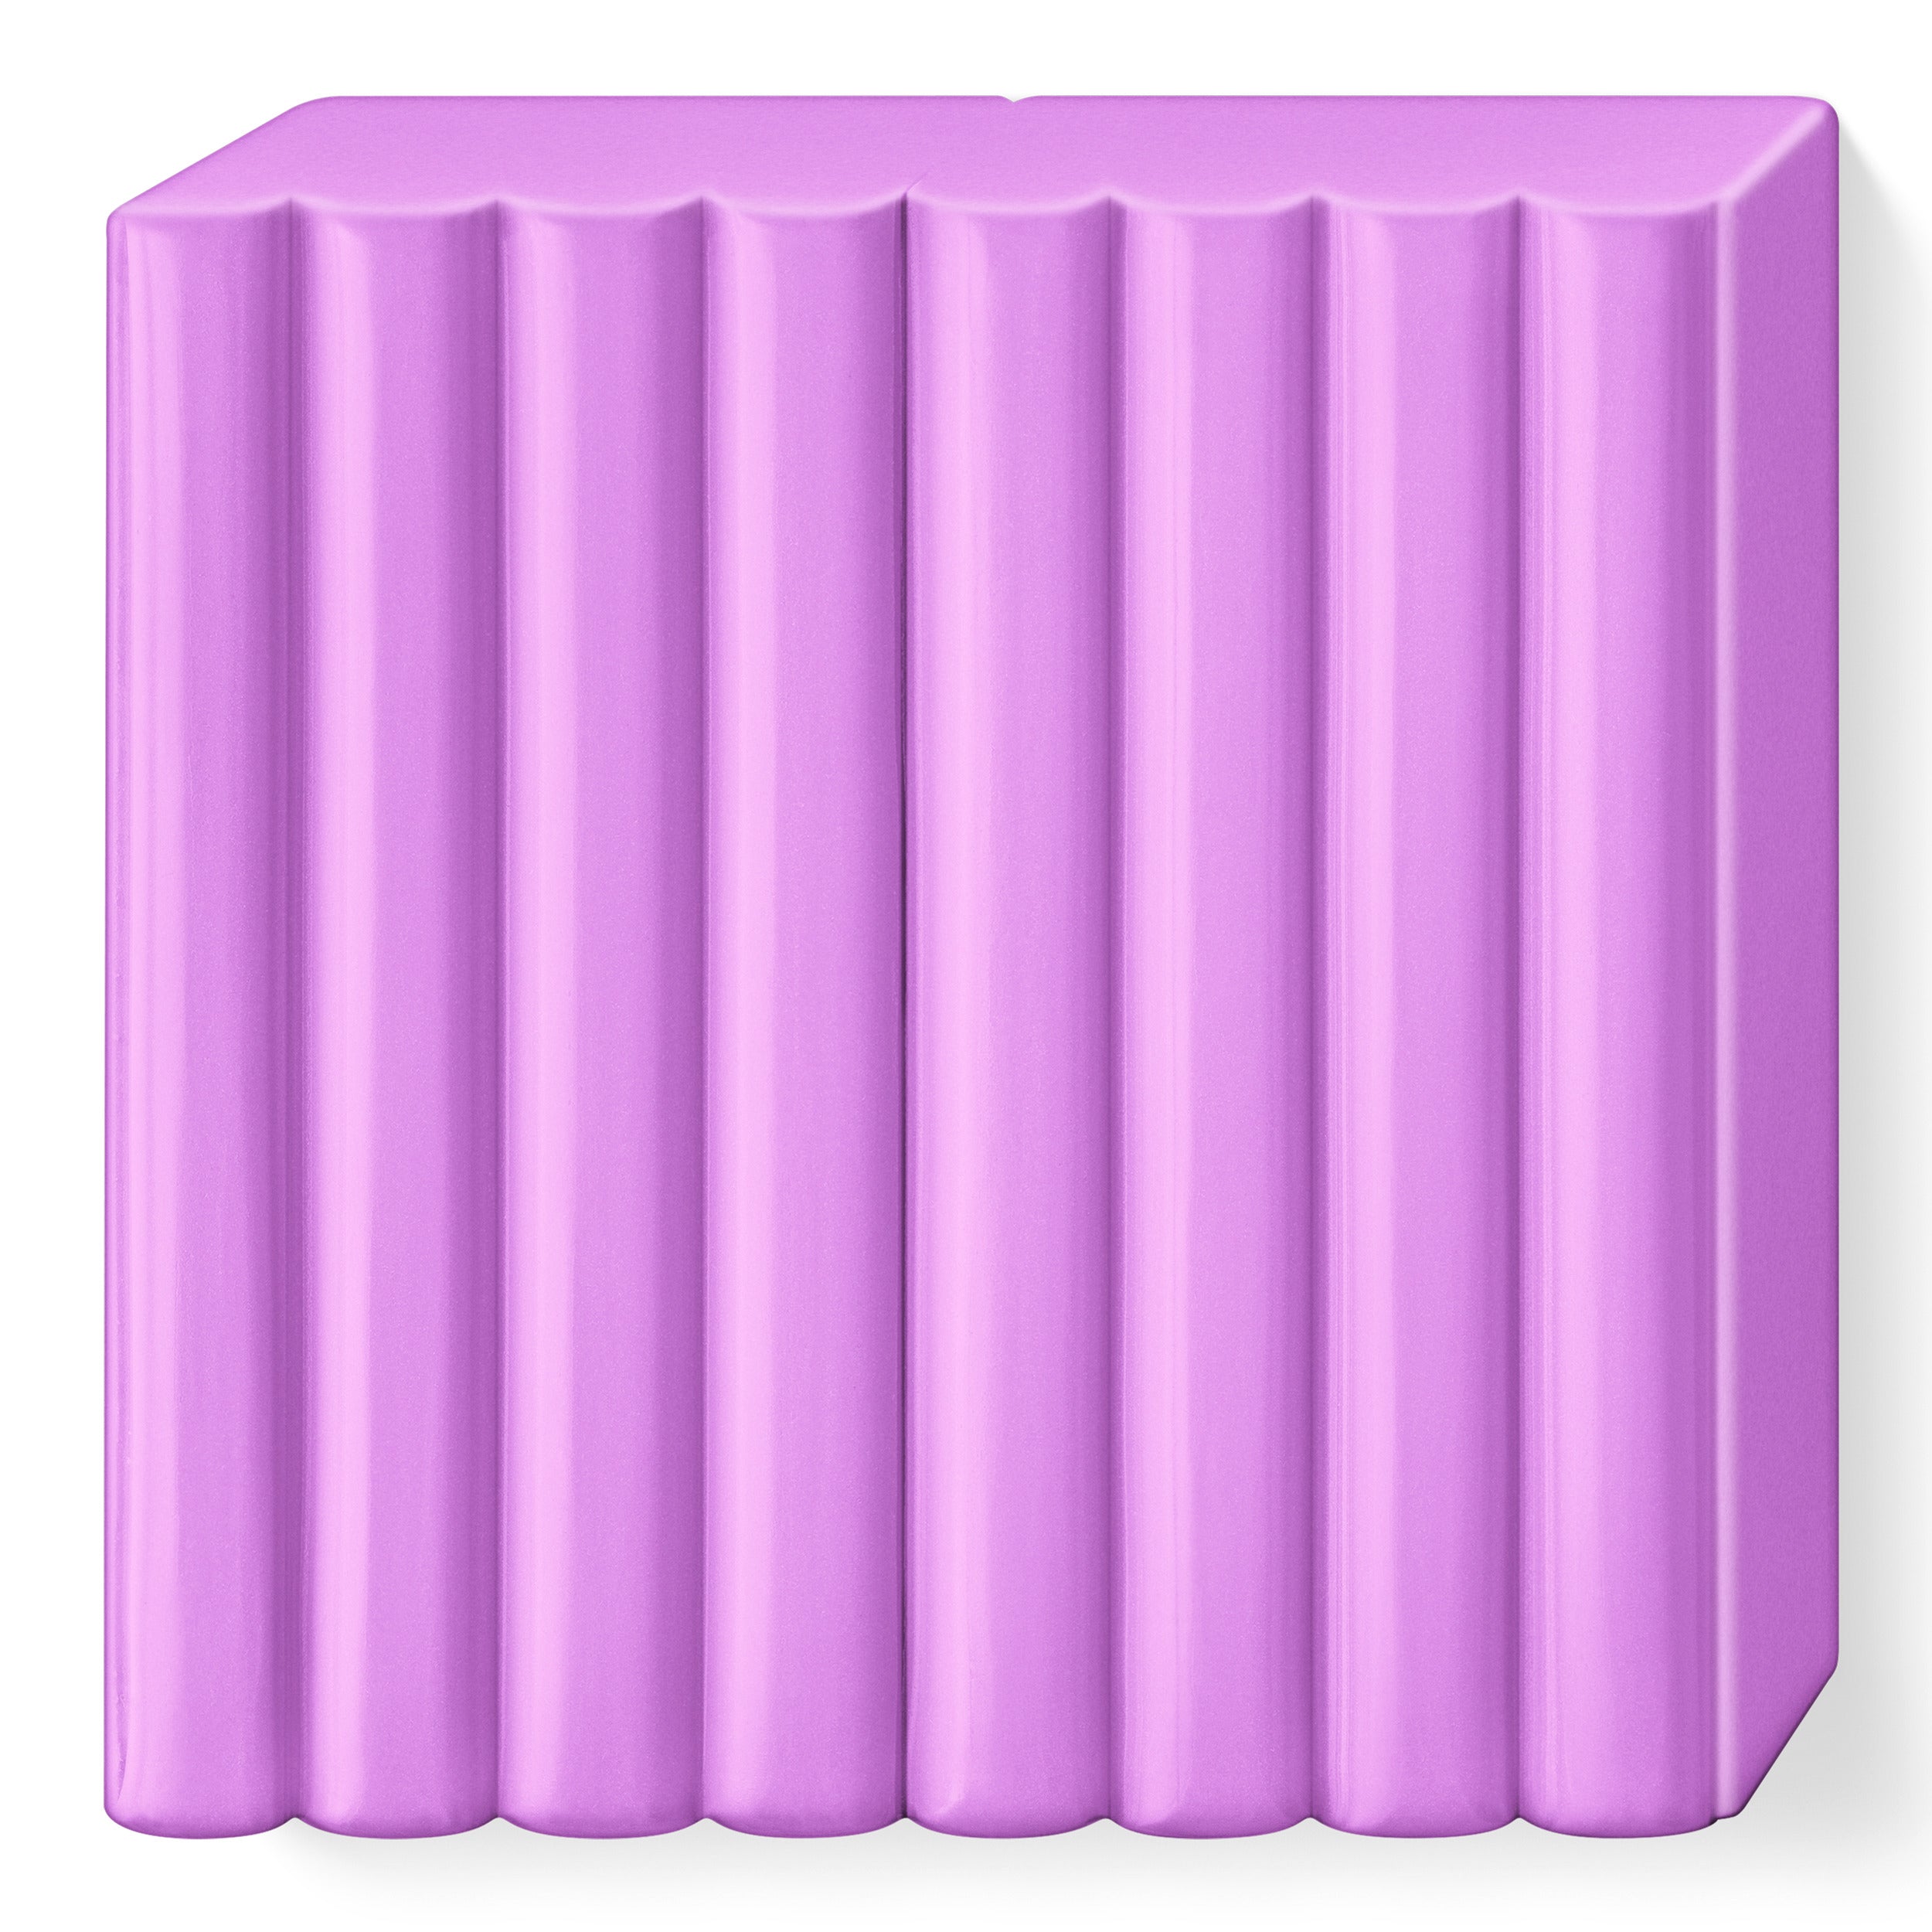 Fimo Soft Polymer Clay Standard Block 57g (2oz) - Lavender